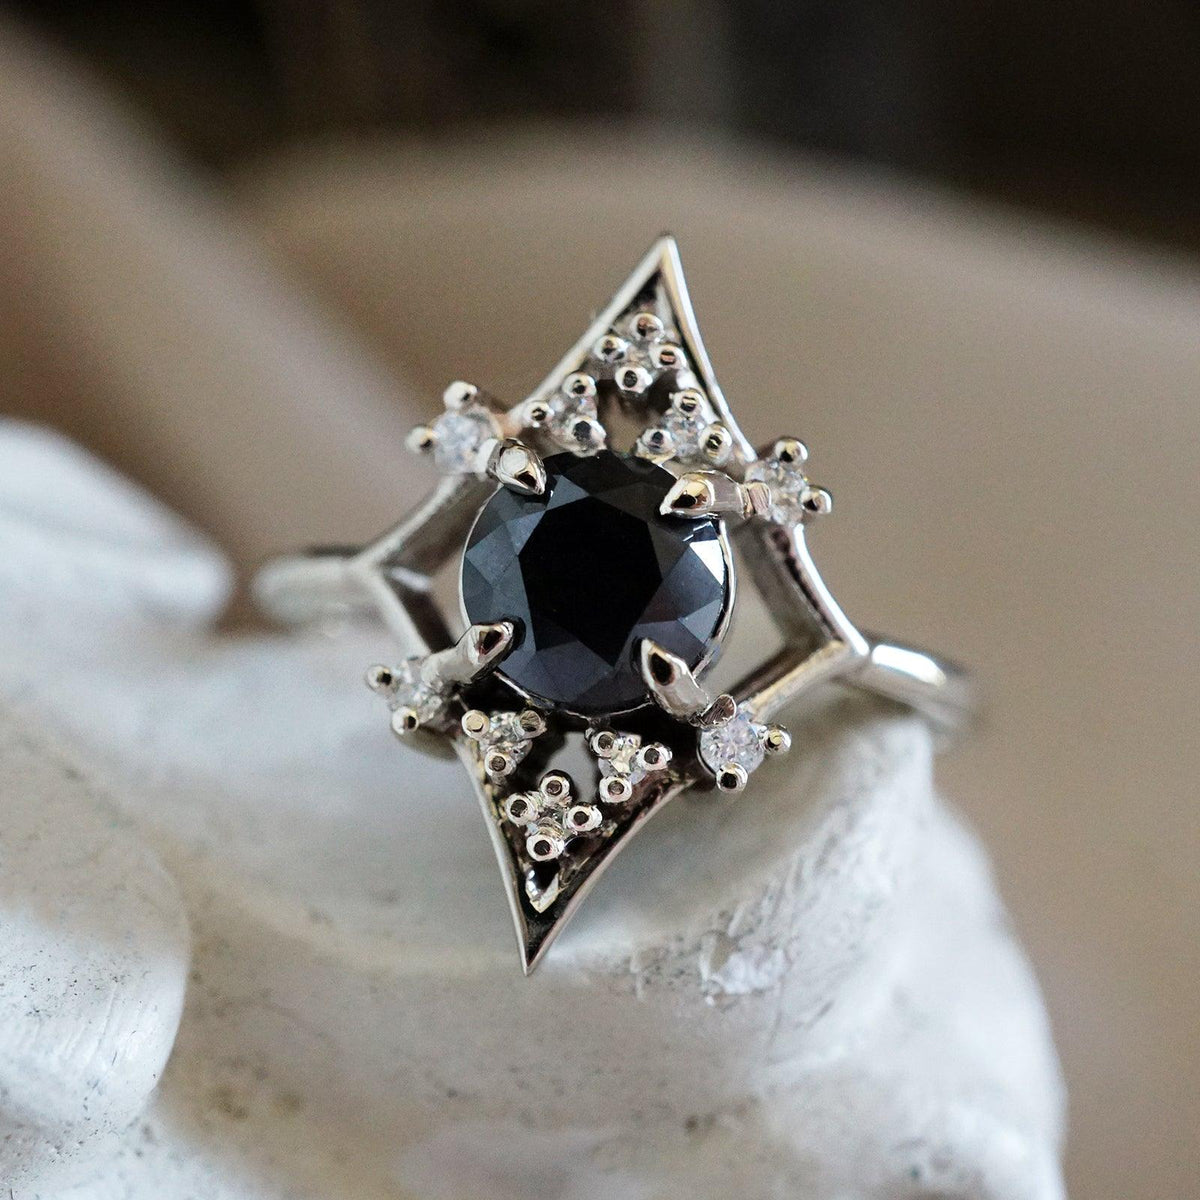 Lovers Shield Black Diamond Ring in 14K and 18K Gold - Tippy Taste Jewelry